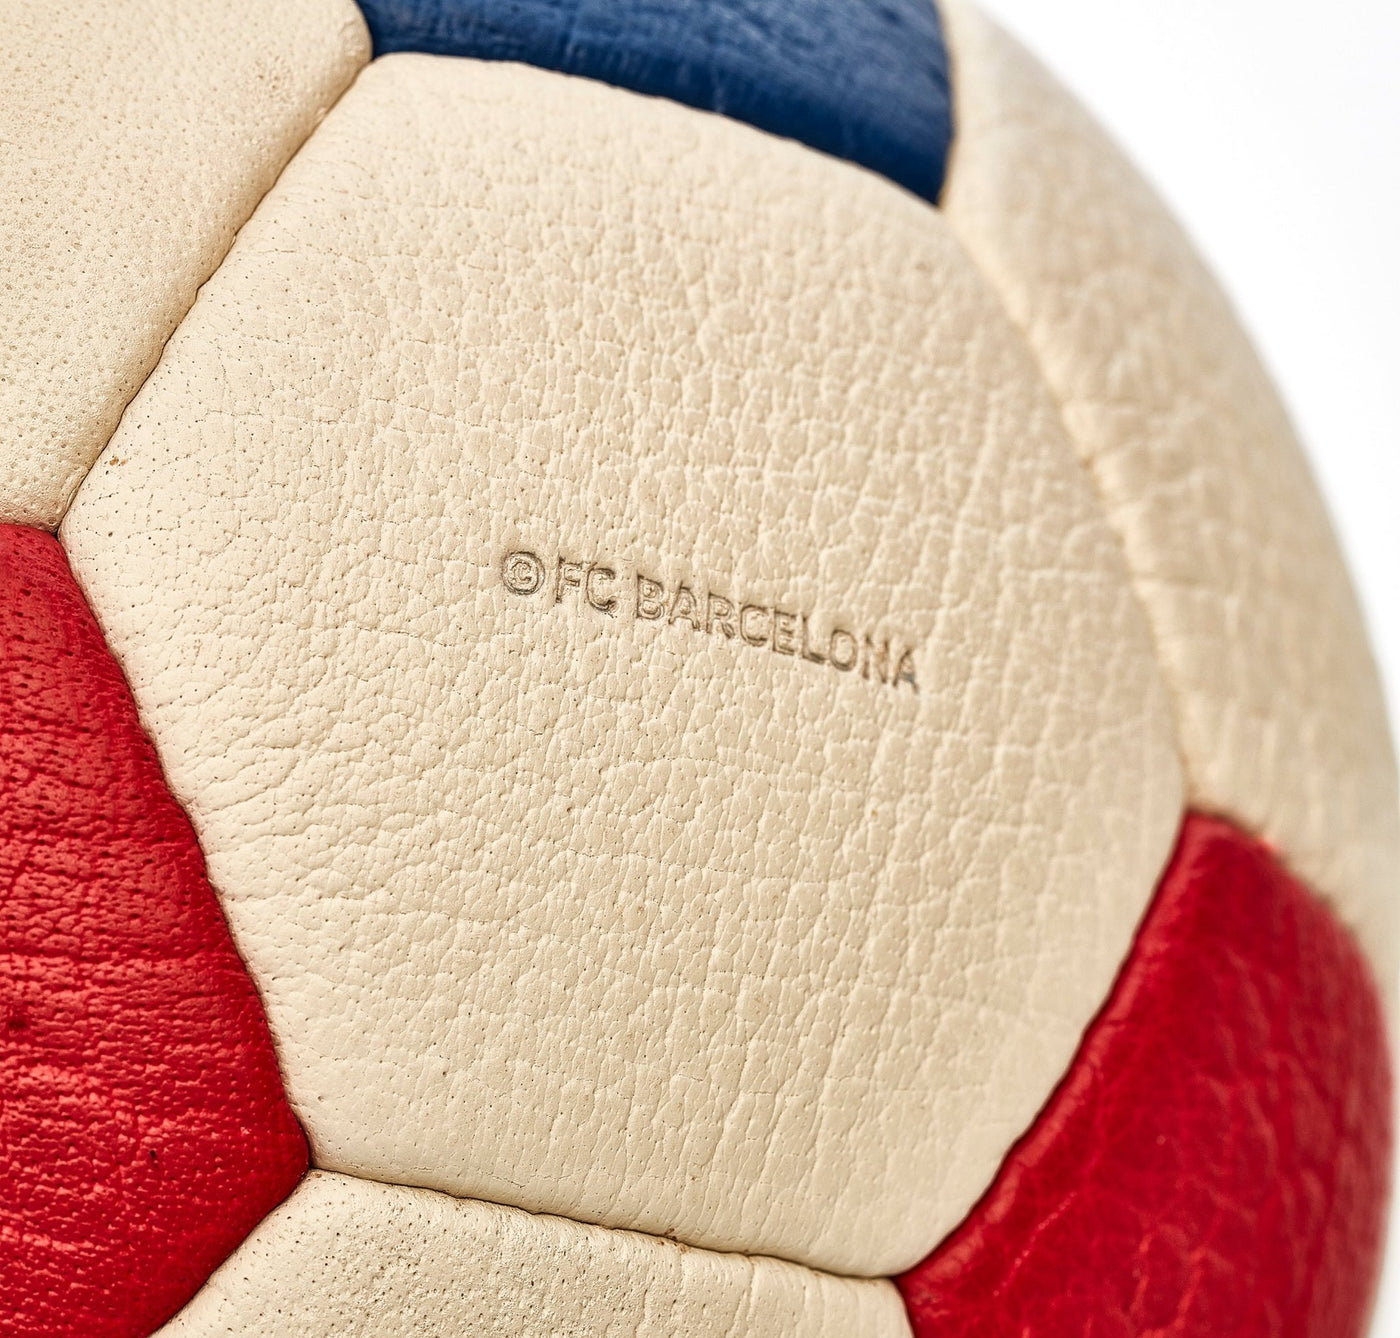 FC Barcelona 32P Leather Soccer Ball - MODEST VINTAGE PLAYER LTD